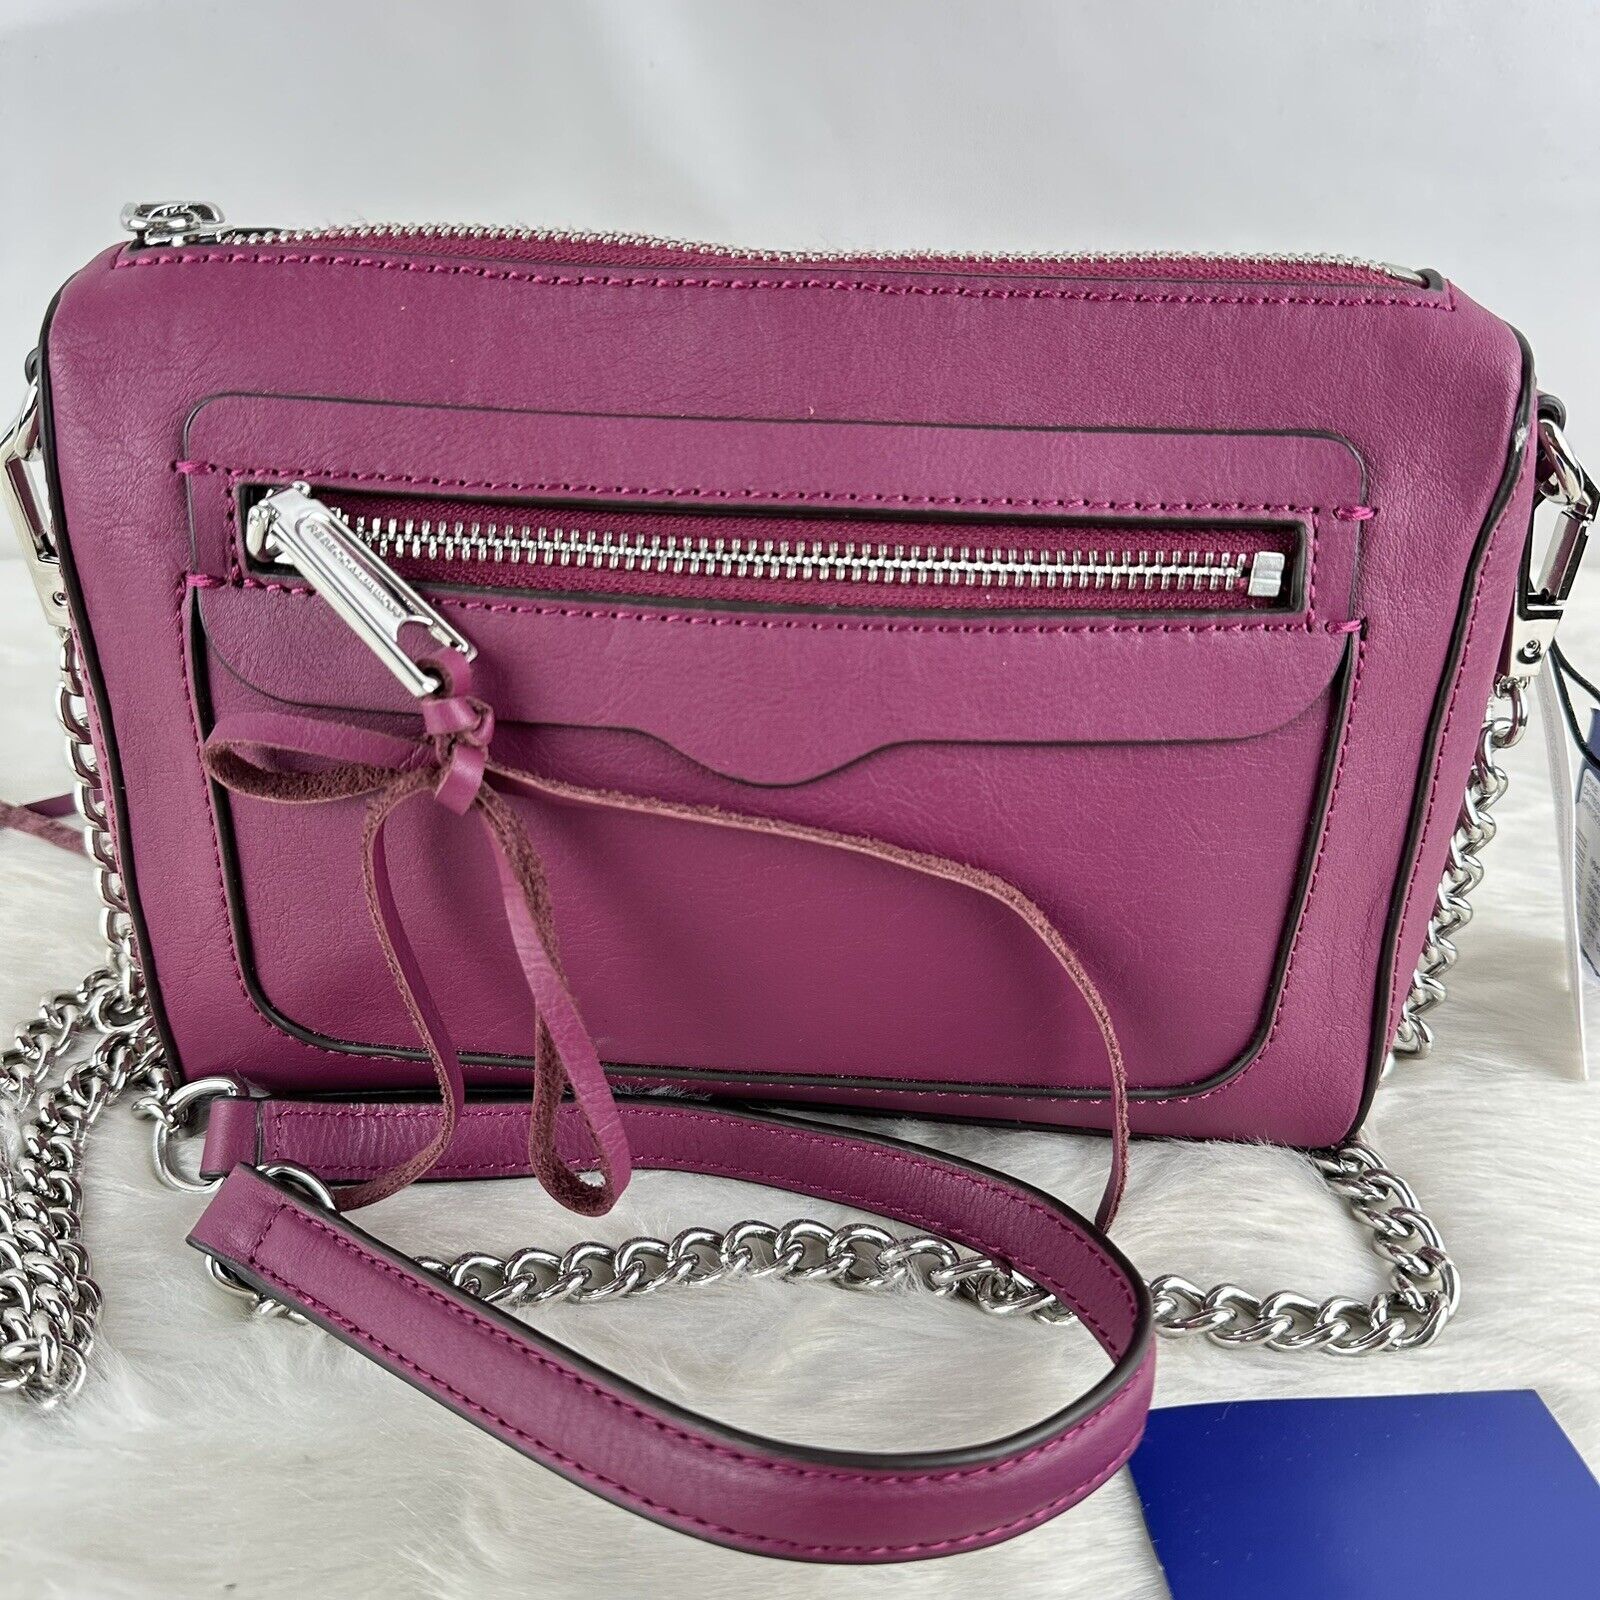 Rebecca Minkoff Avery Soft Plum Crossbody Bag | eBay AU